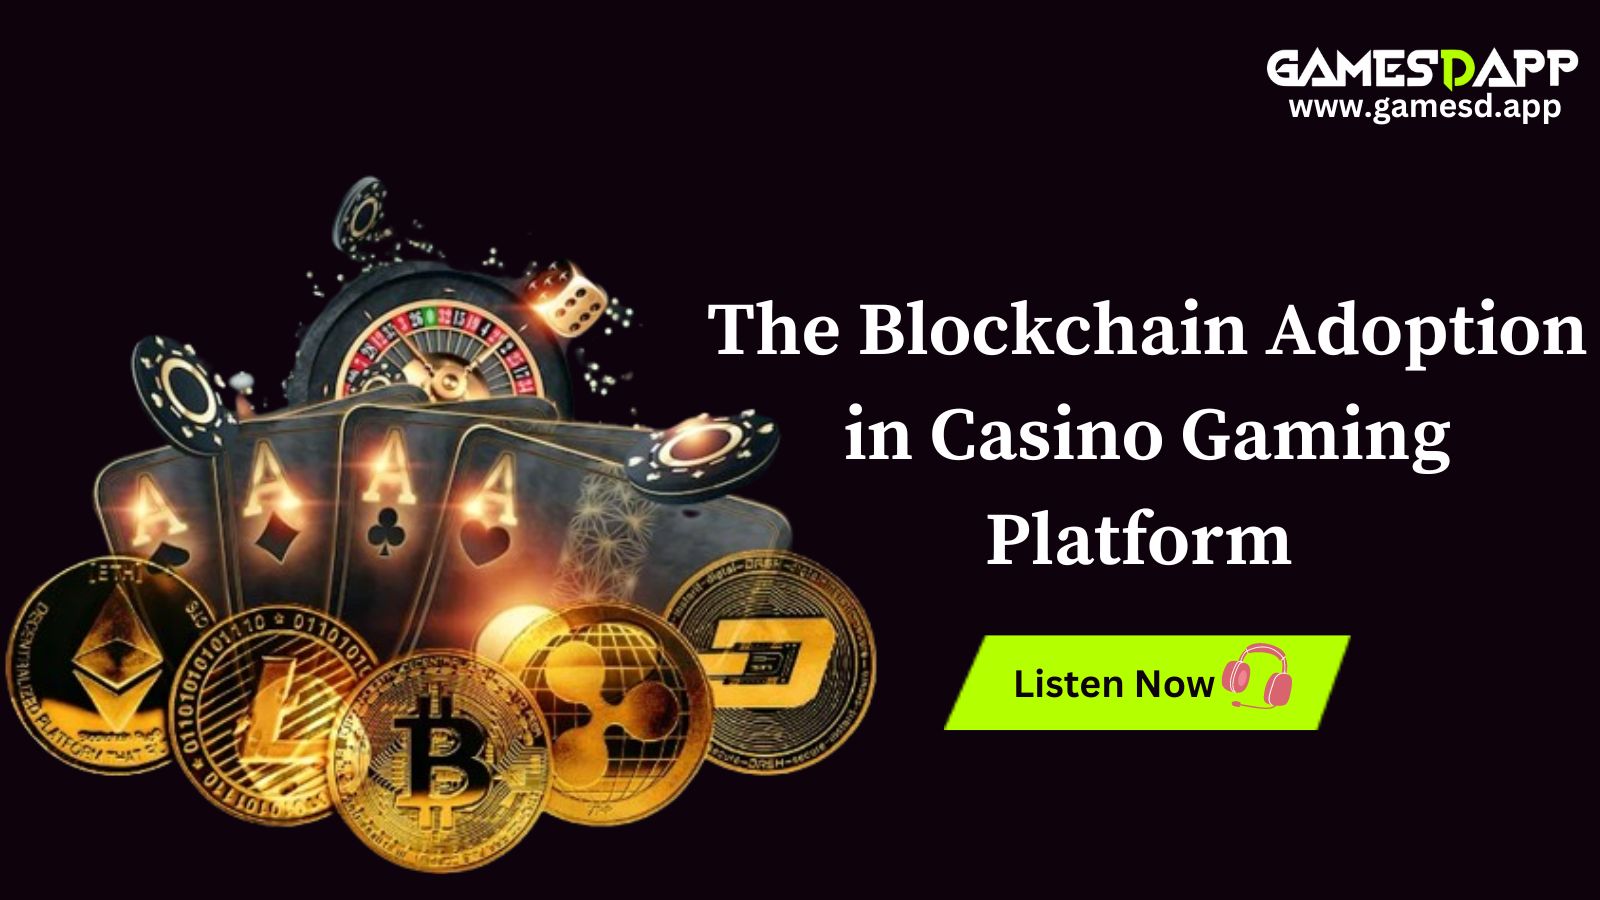 The Blockchain Adoption in Casino Gaming Platform